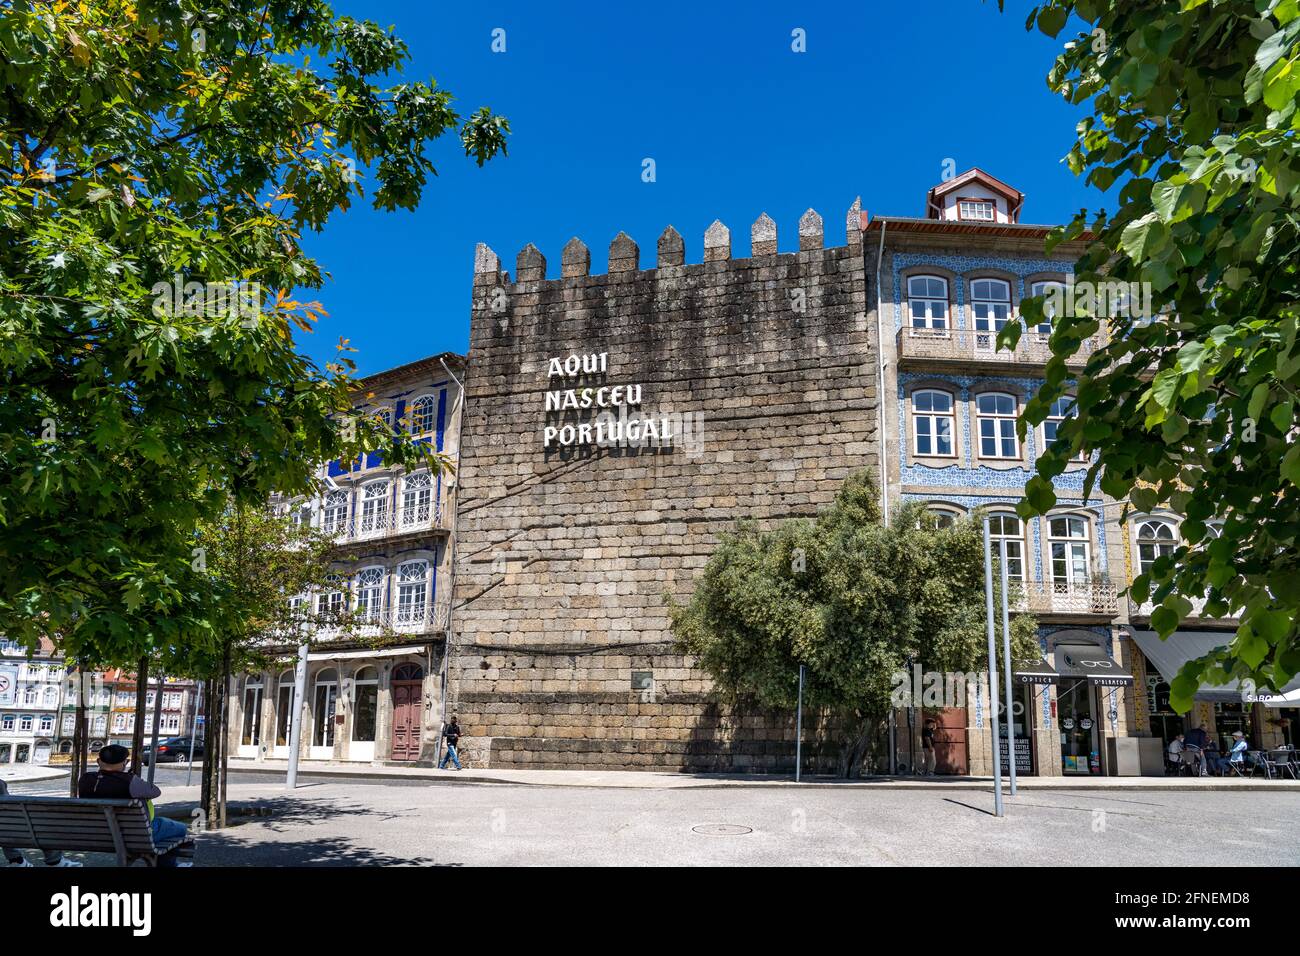 Aufschrift Aqui nasceuu Portugal - Hier wurde Portugal geboren - auf dem Turm der alten Stadtmauer Torre de Alfandega à Guimaraes, Portugal, Europa Banque D'Images